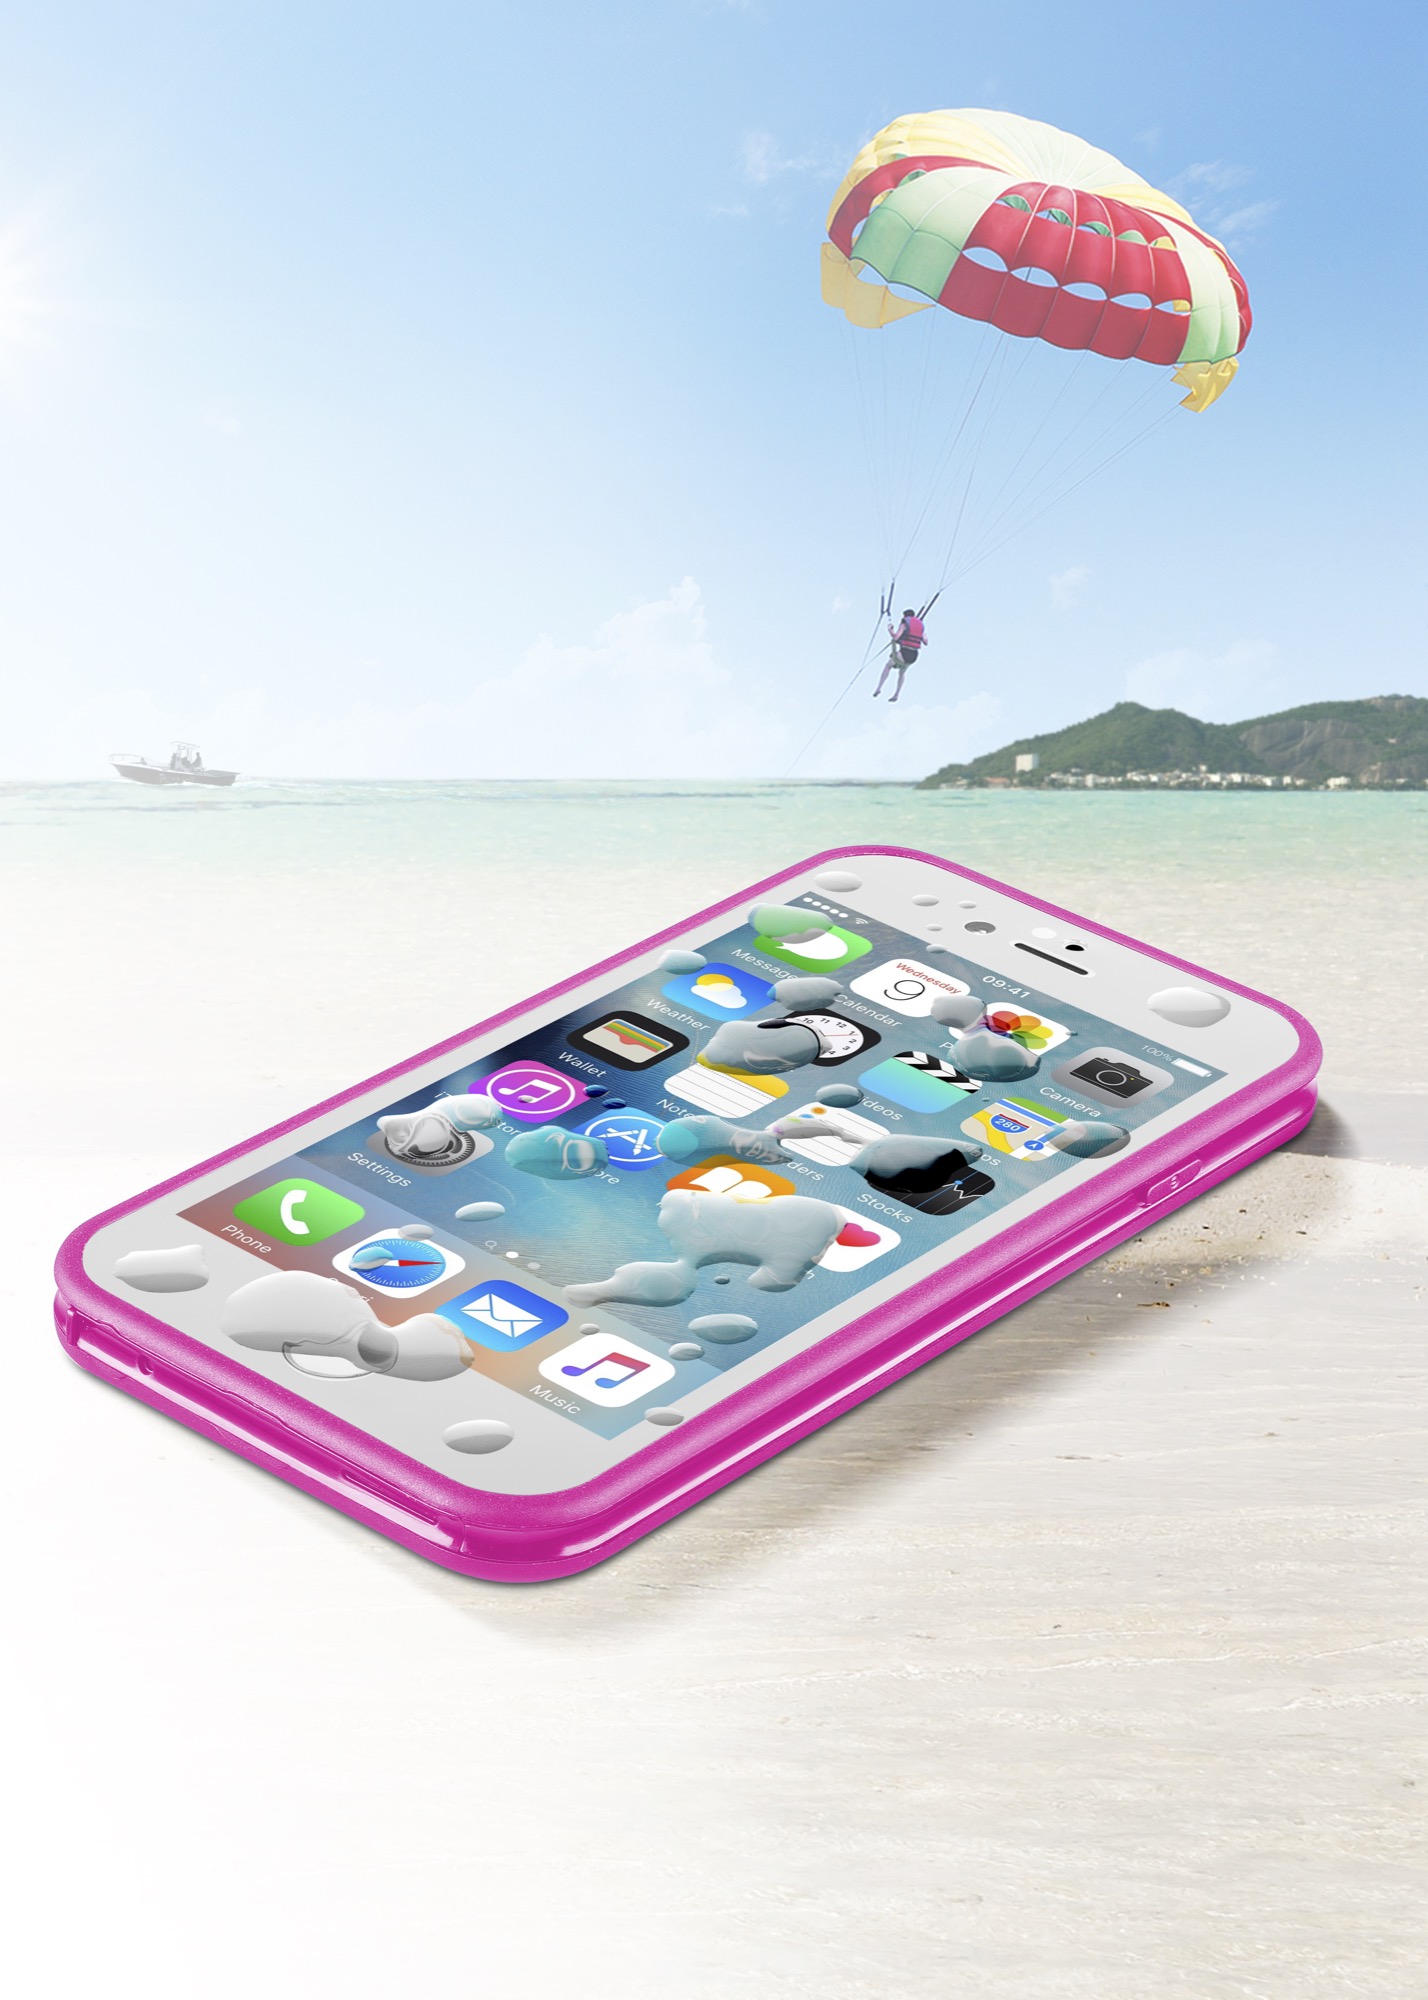 Voyager compact, iPhone 6, waterbestendig IPx6, roze